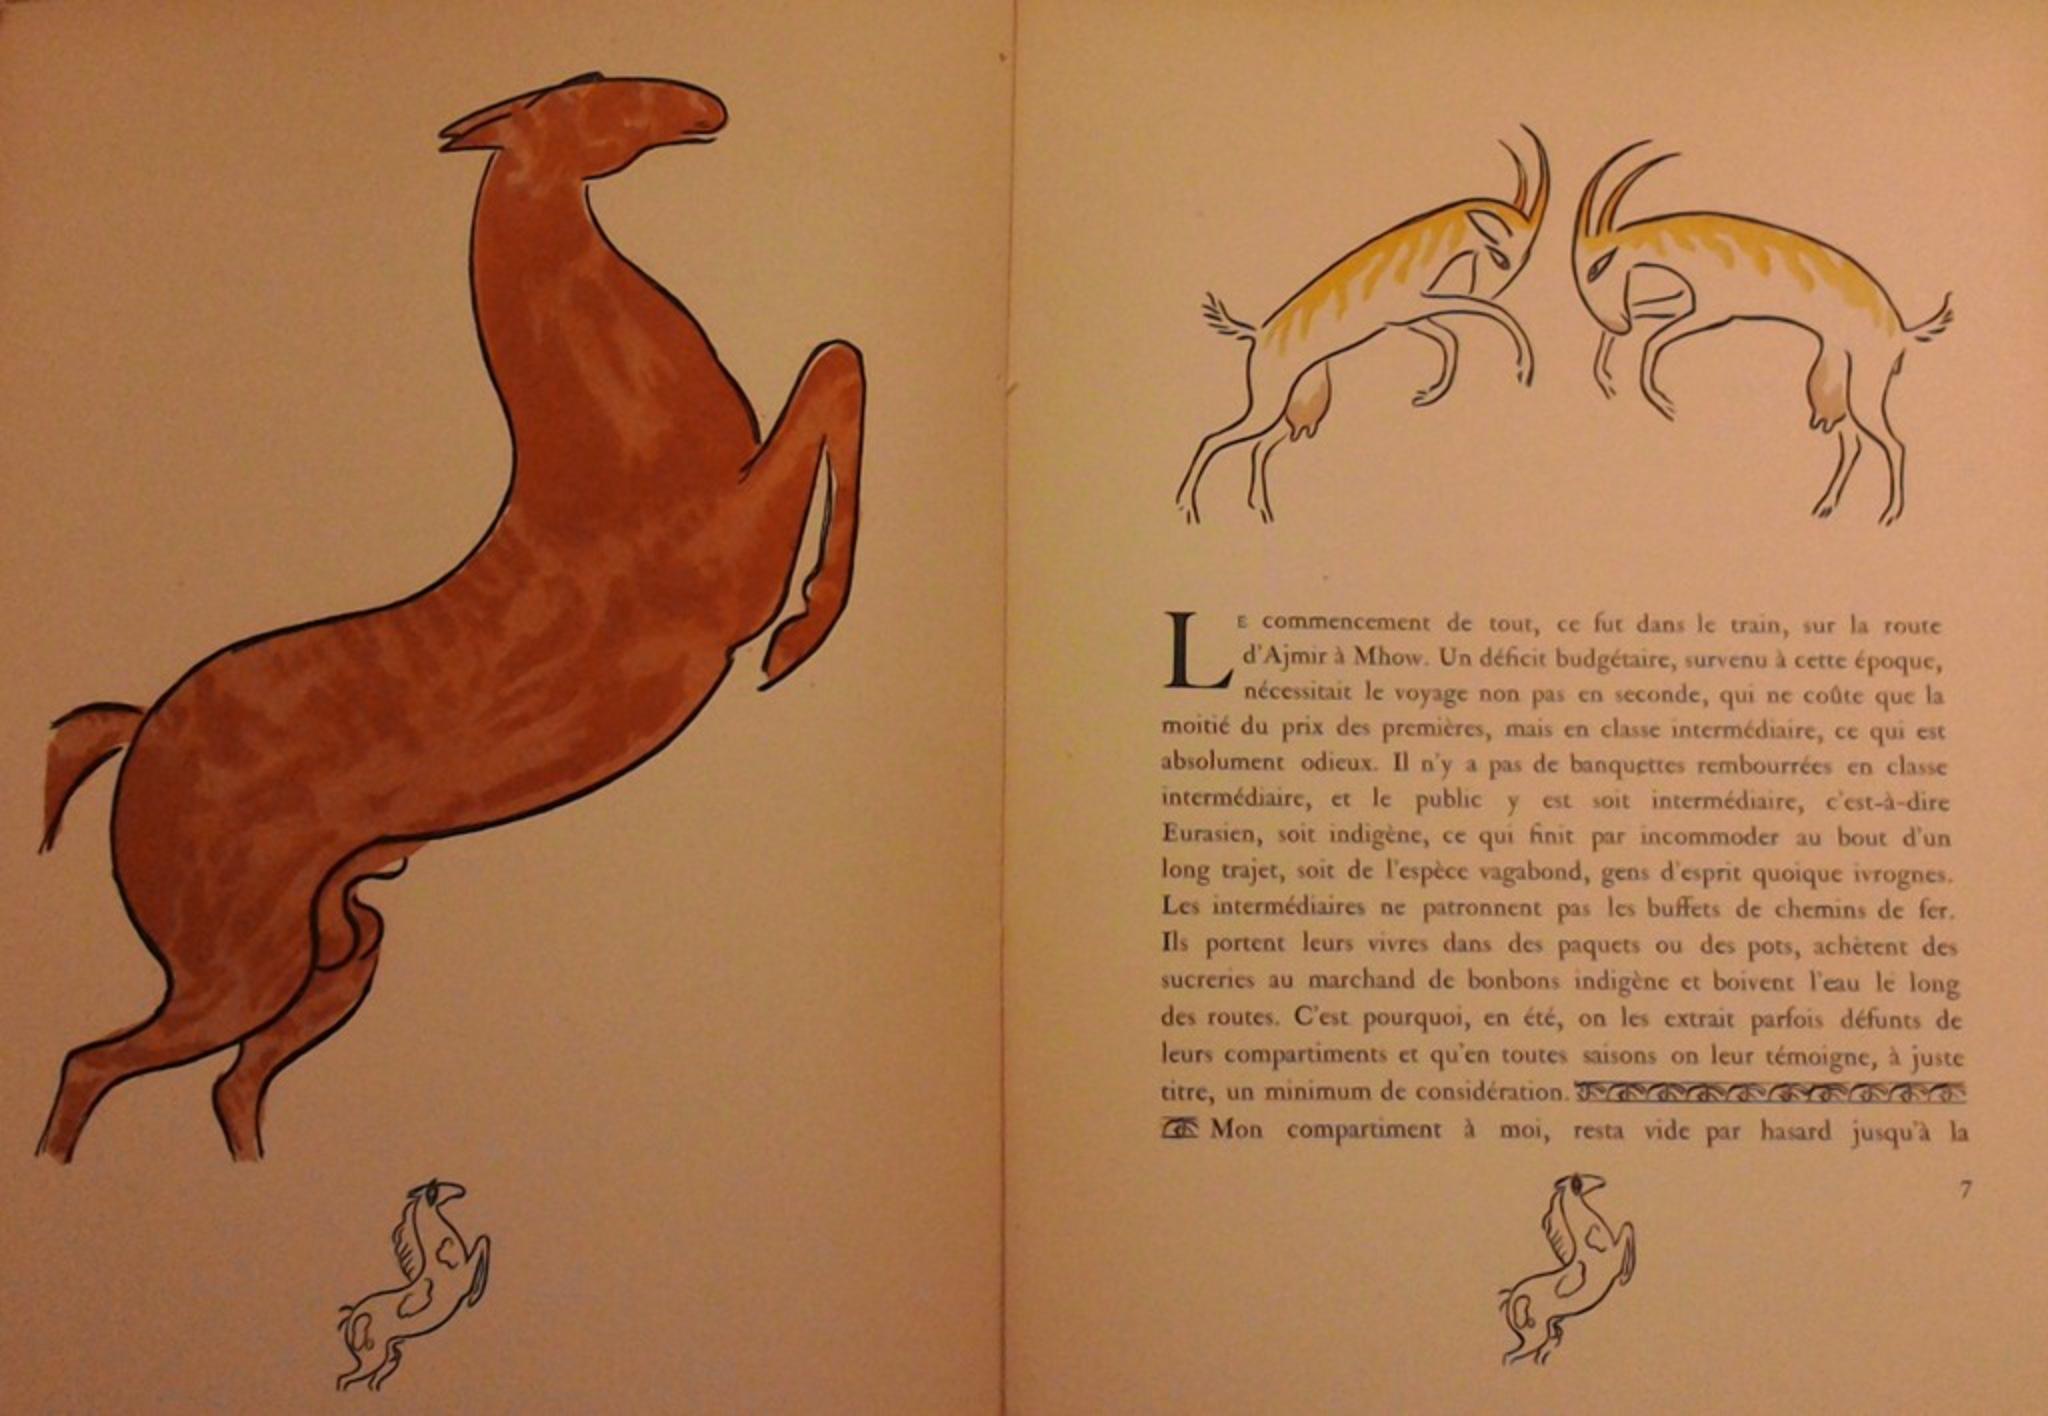 Les Plus Beaux Contes de Kipling -Rare Illustrated Book by K. Van Dongen - 1920 - Art by Kees van Dongen